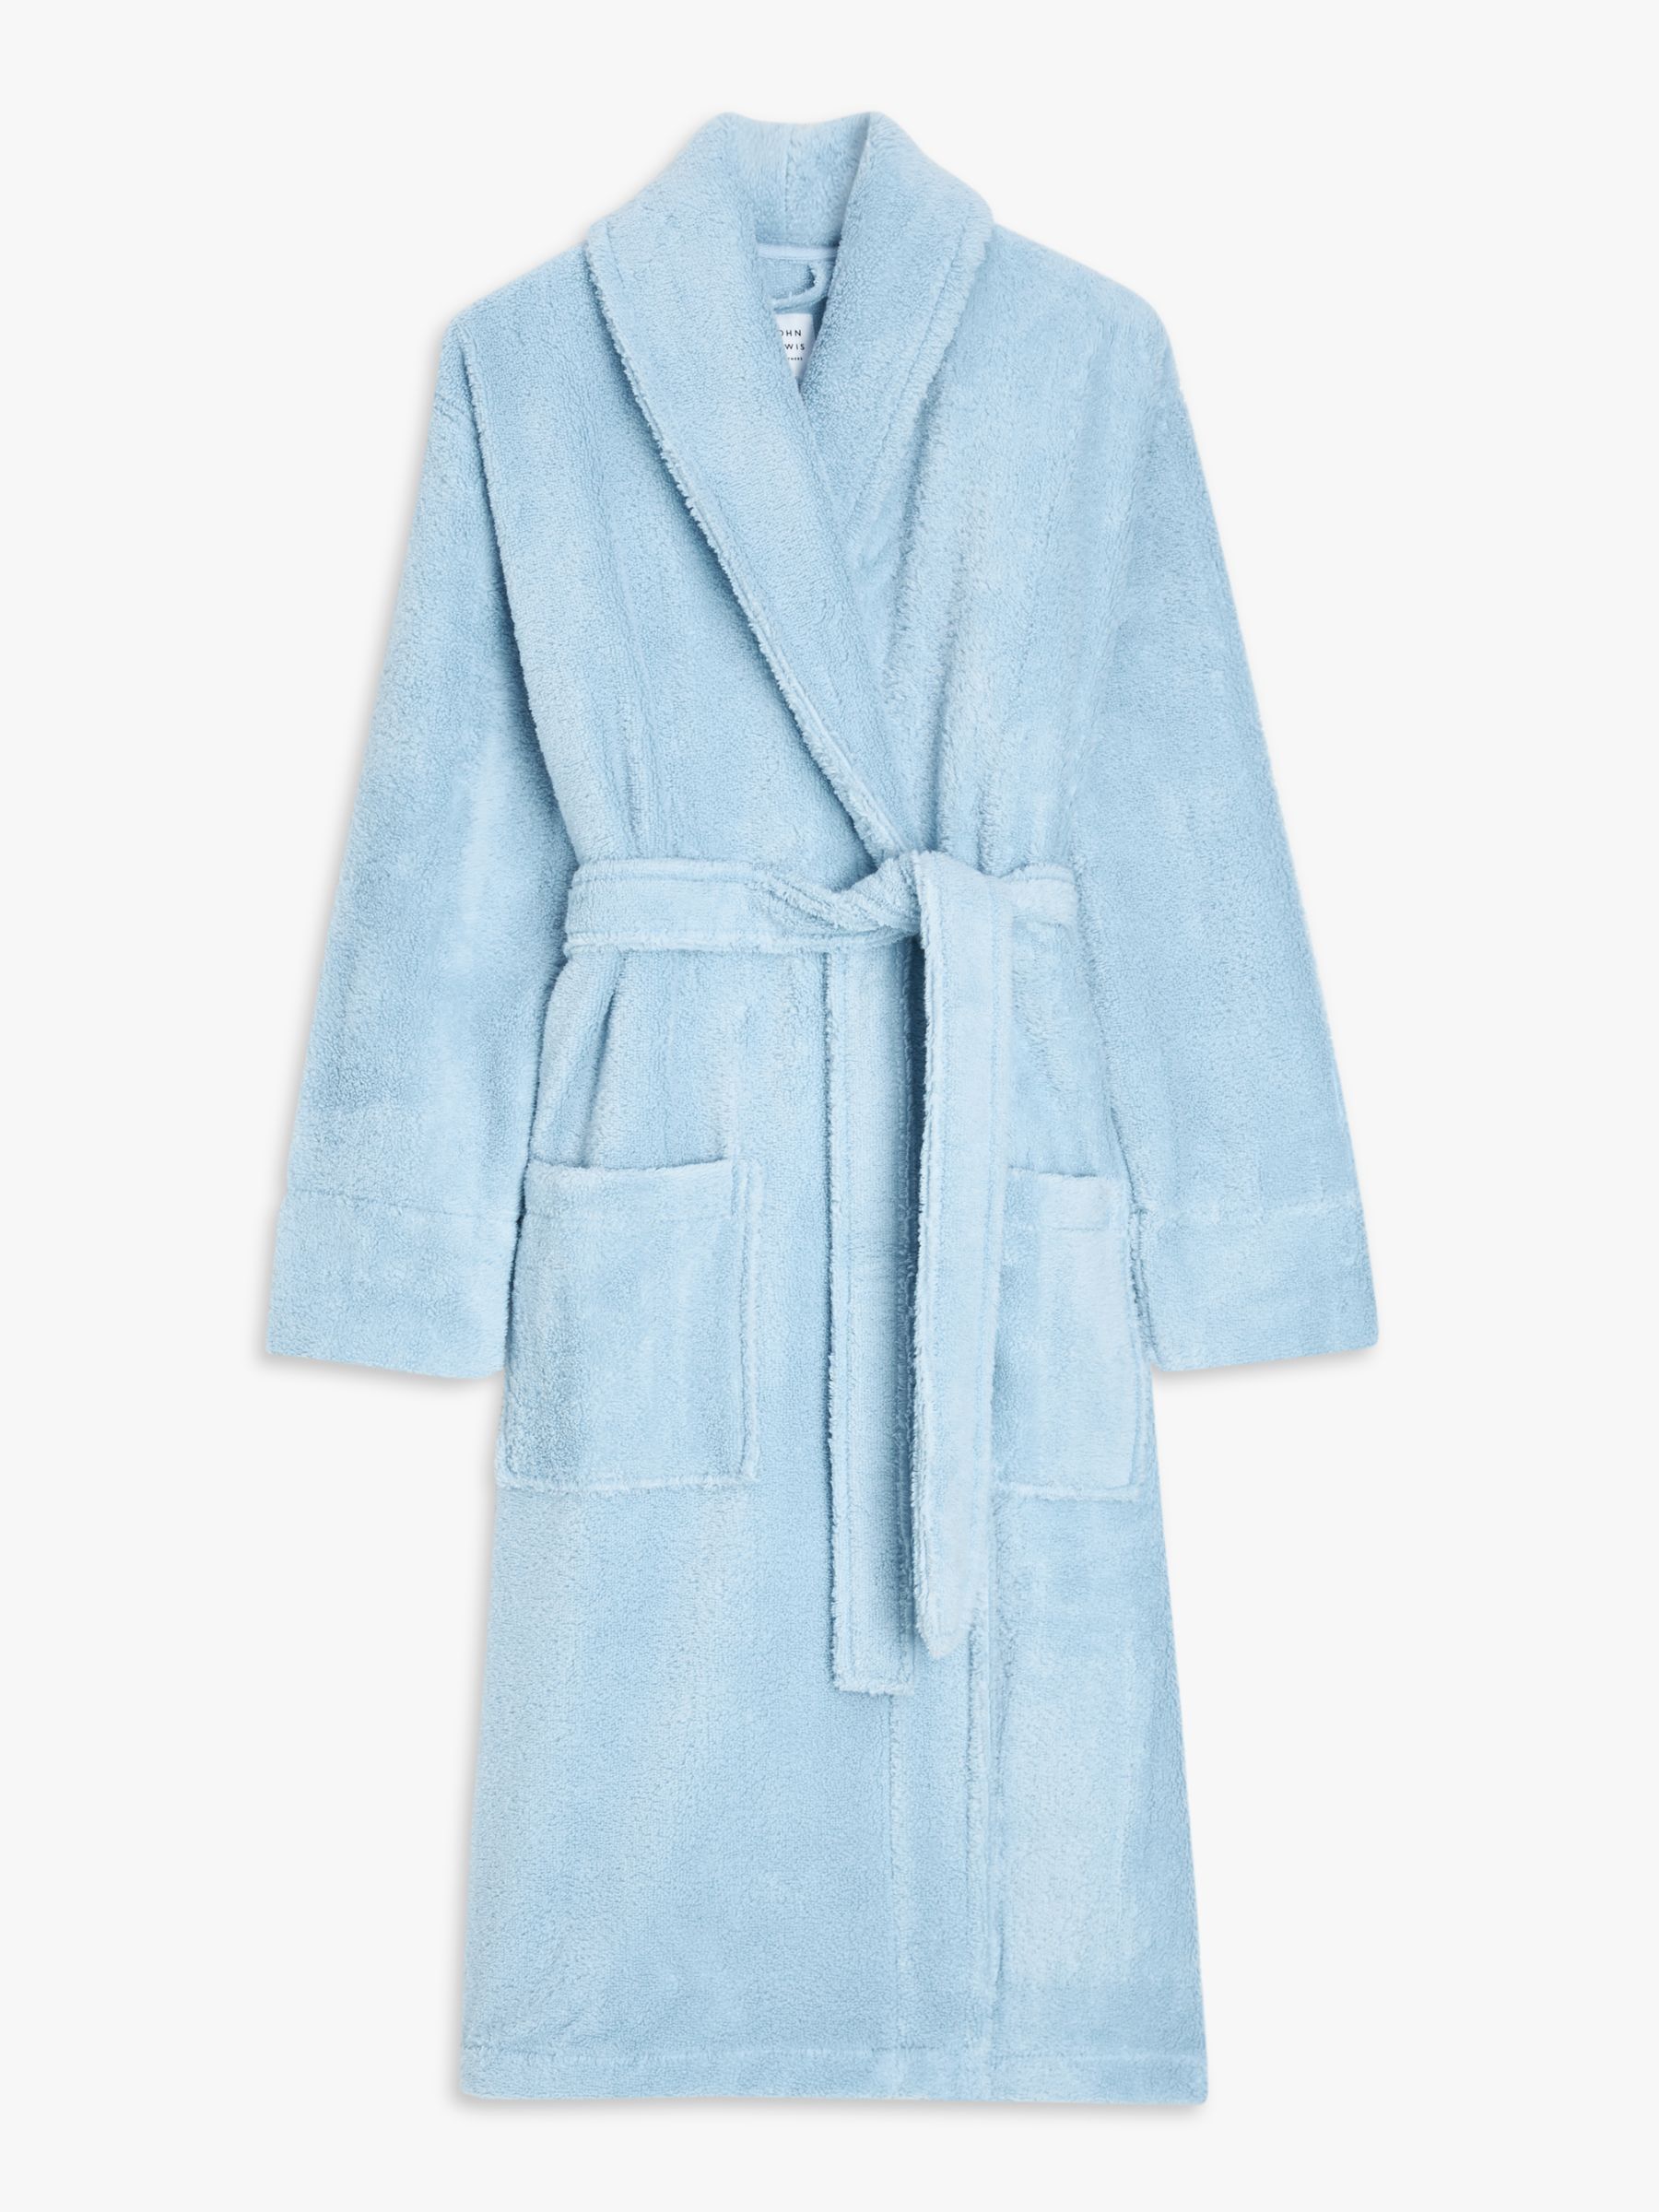 John Lewis Luxury Towelling Robe, Blue, S